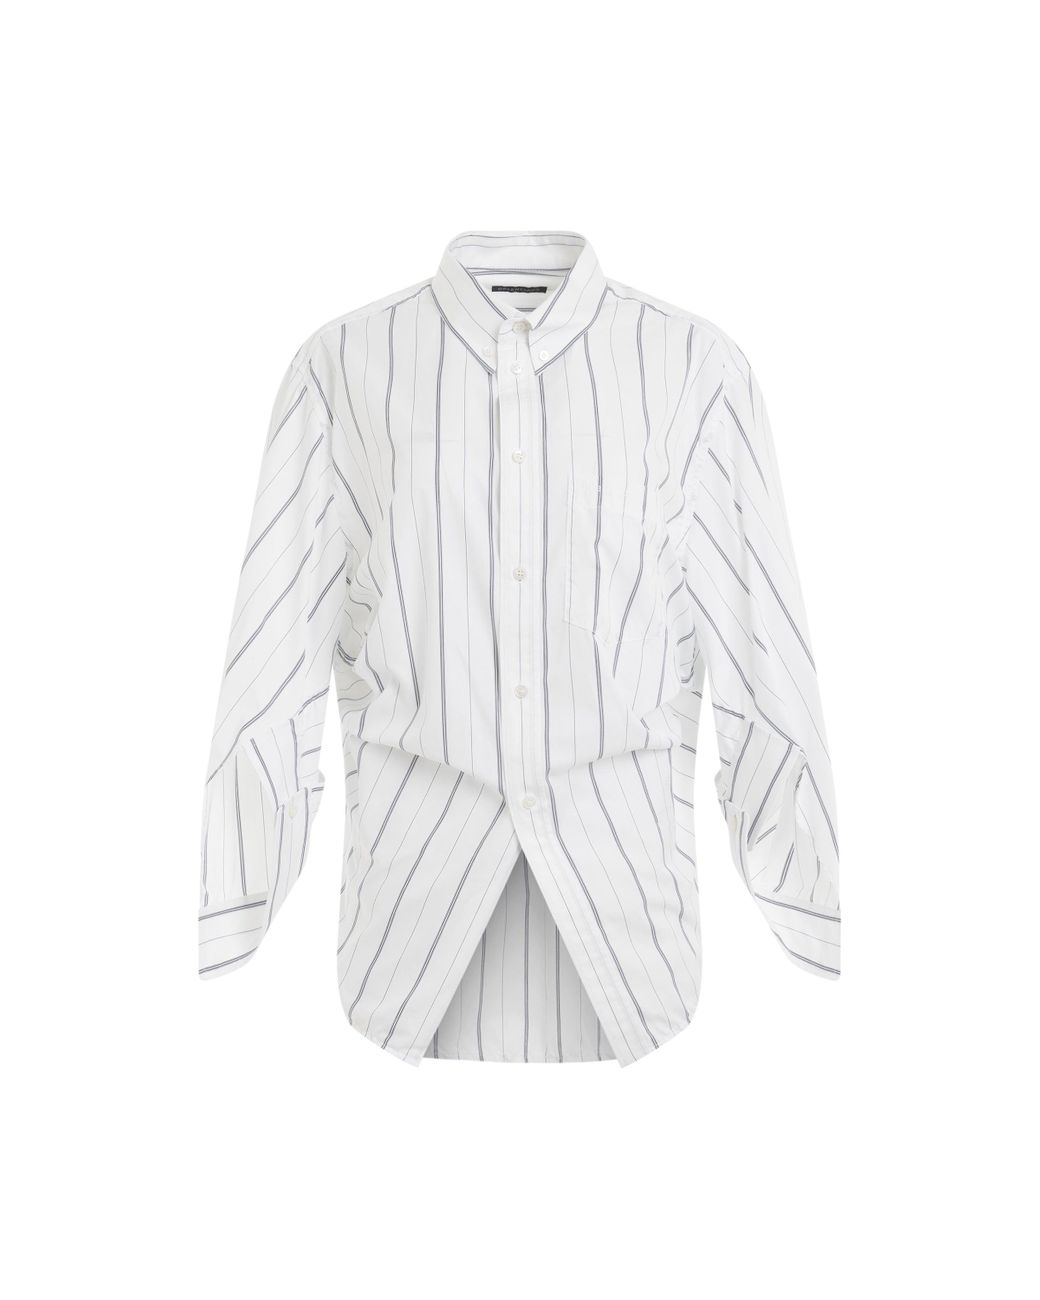 Balenciaga Stripe Wing Shirt In White/navy | Lyst